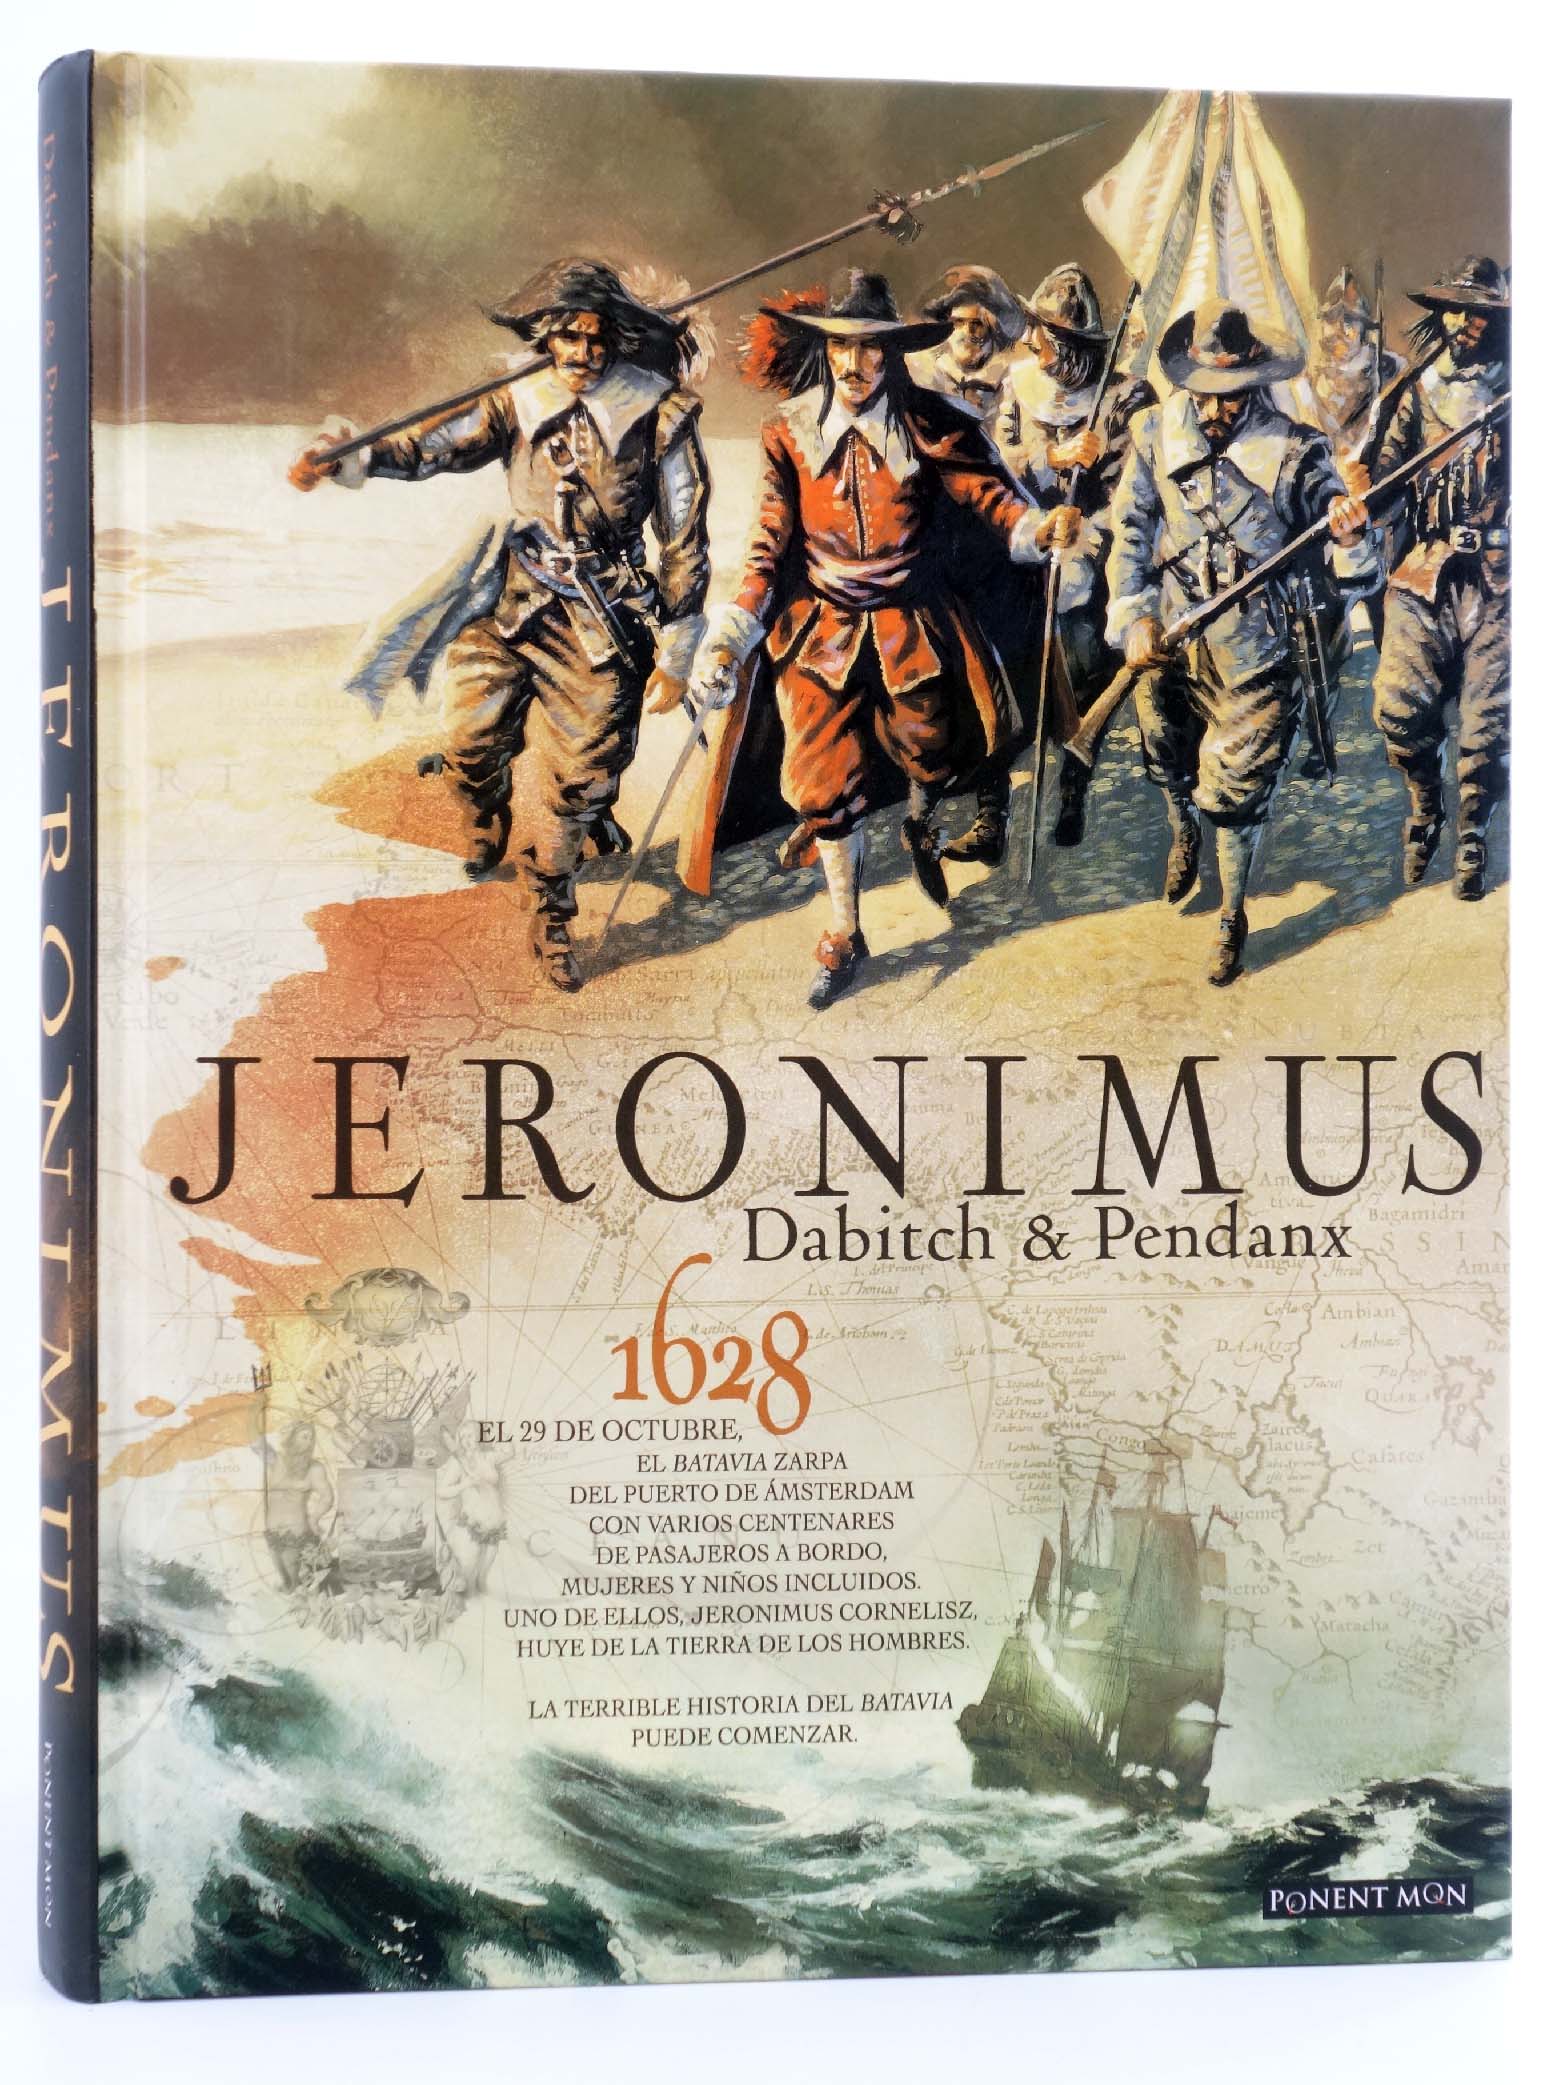 JERONIMUS 1628 (Dabitch / Pendanx) Ponent Mon, 2017. OFRT antes 44E - Dabitch / Pendanx